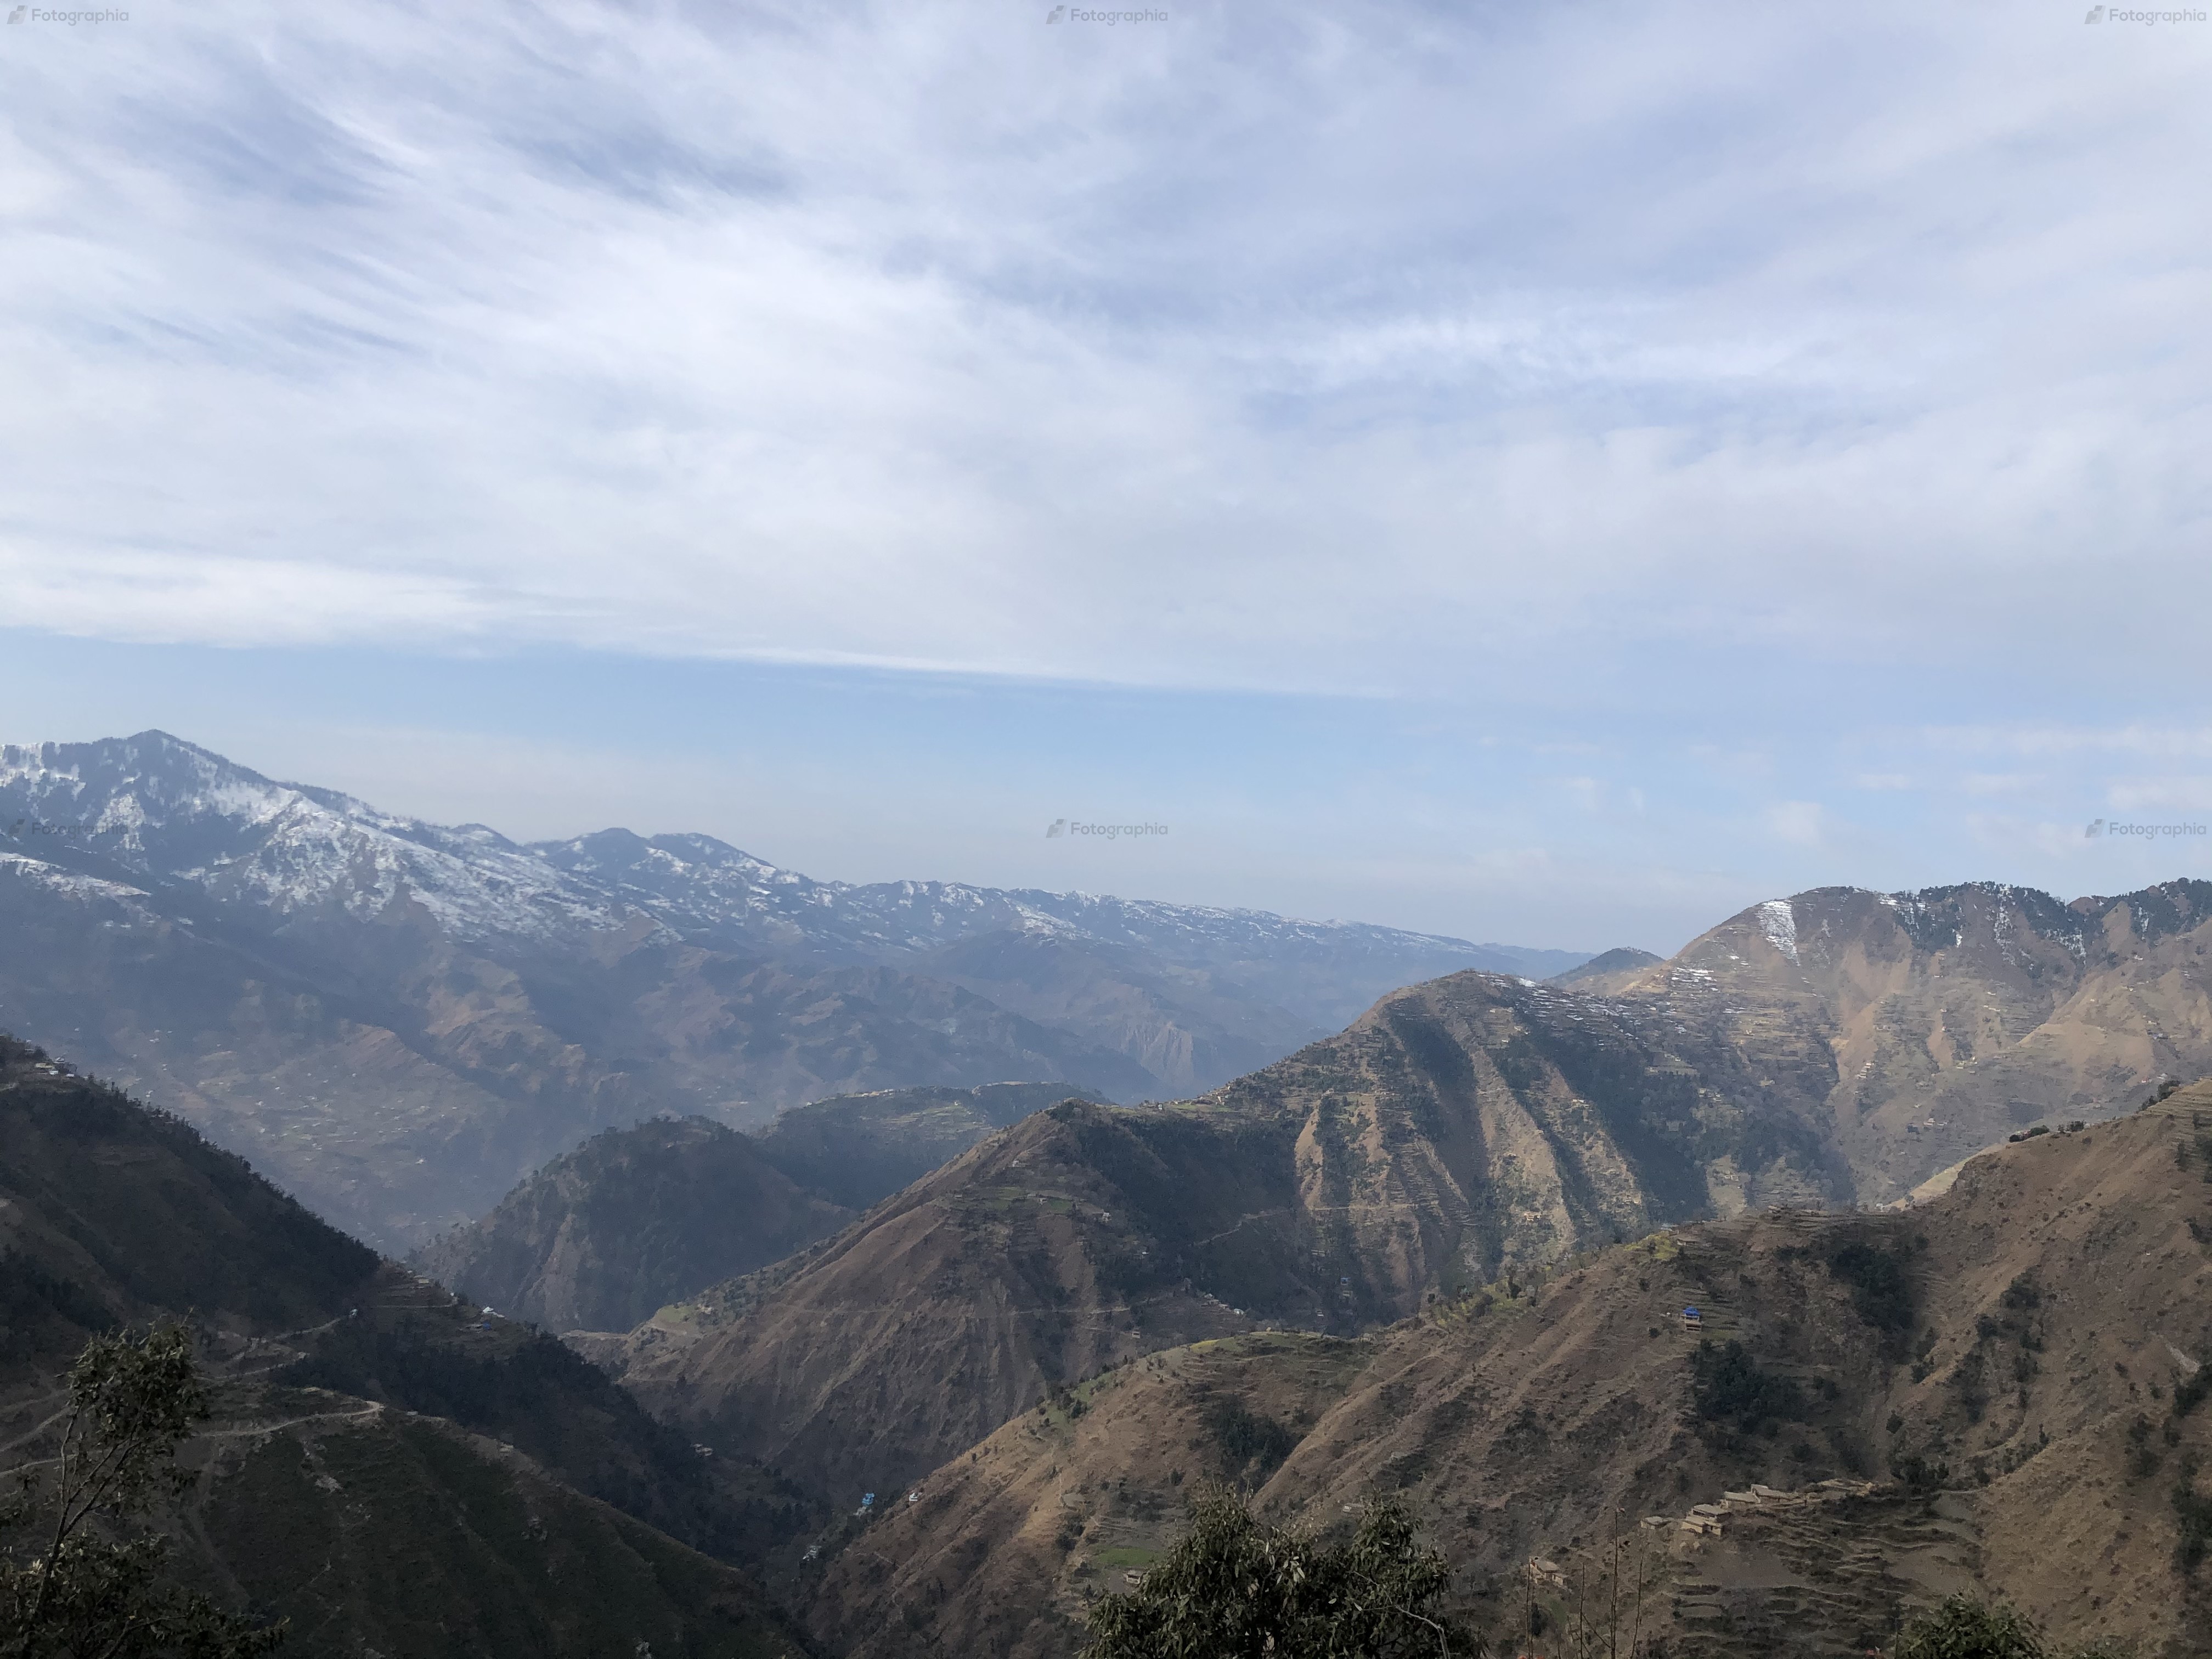 Mountain valley view